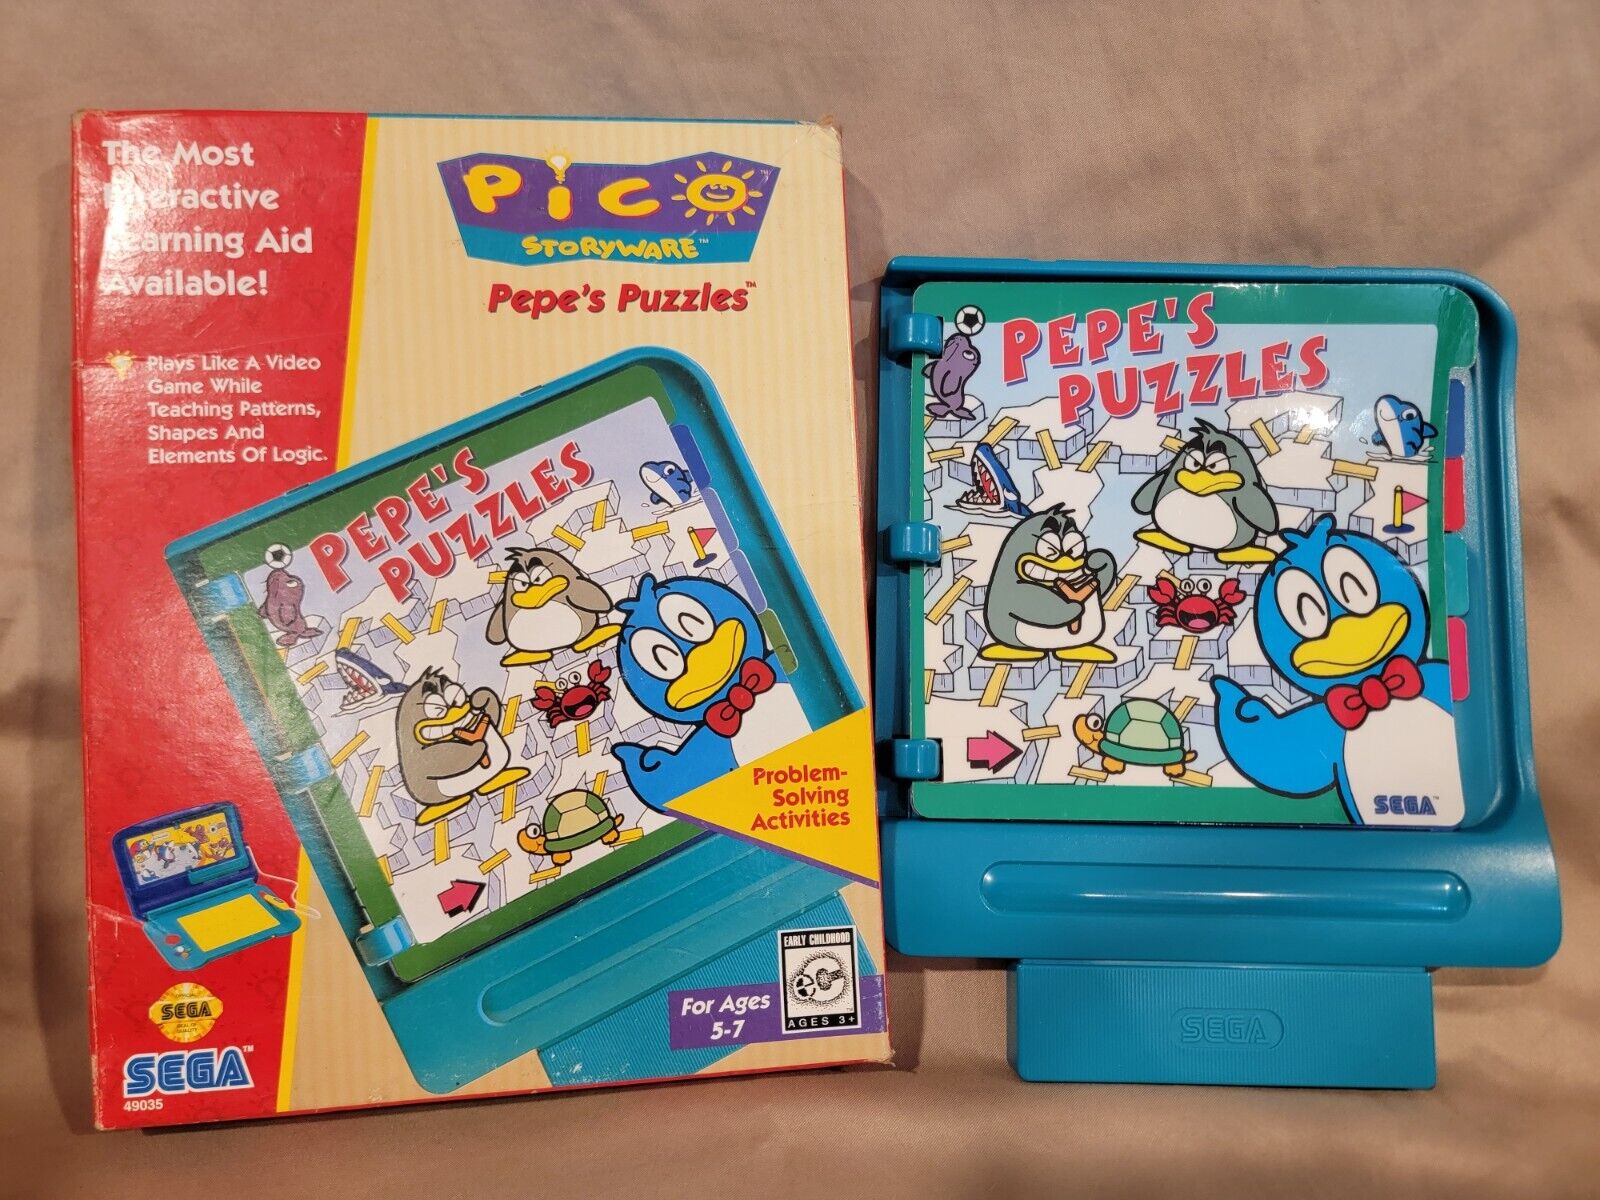 Pico Storyware Pepe's Puzzles Sega